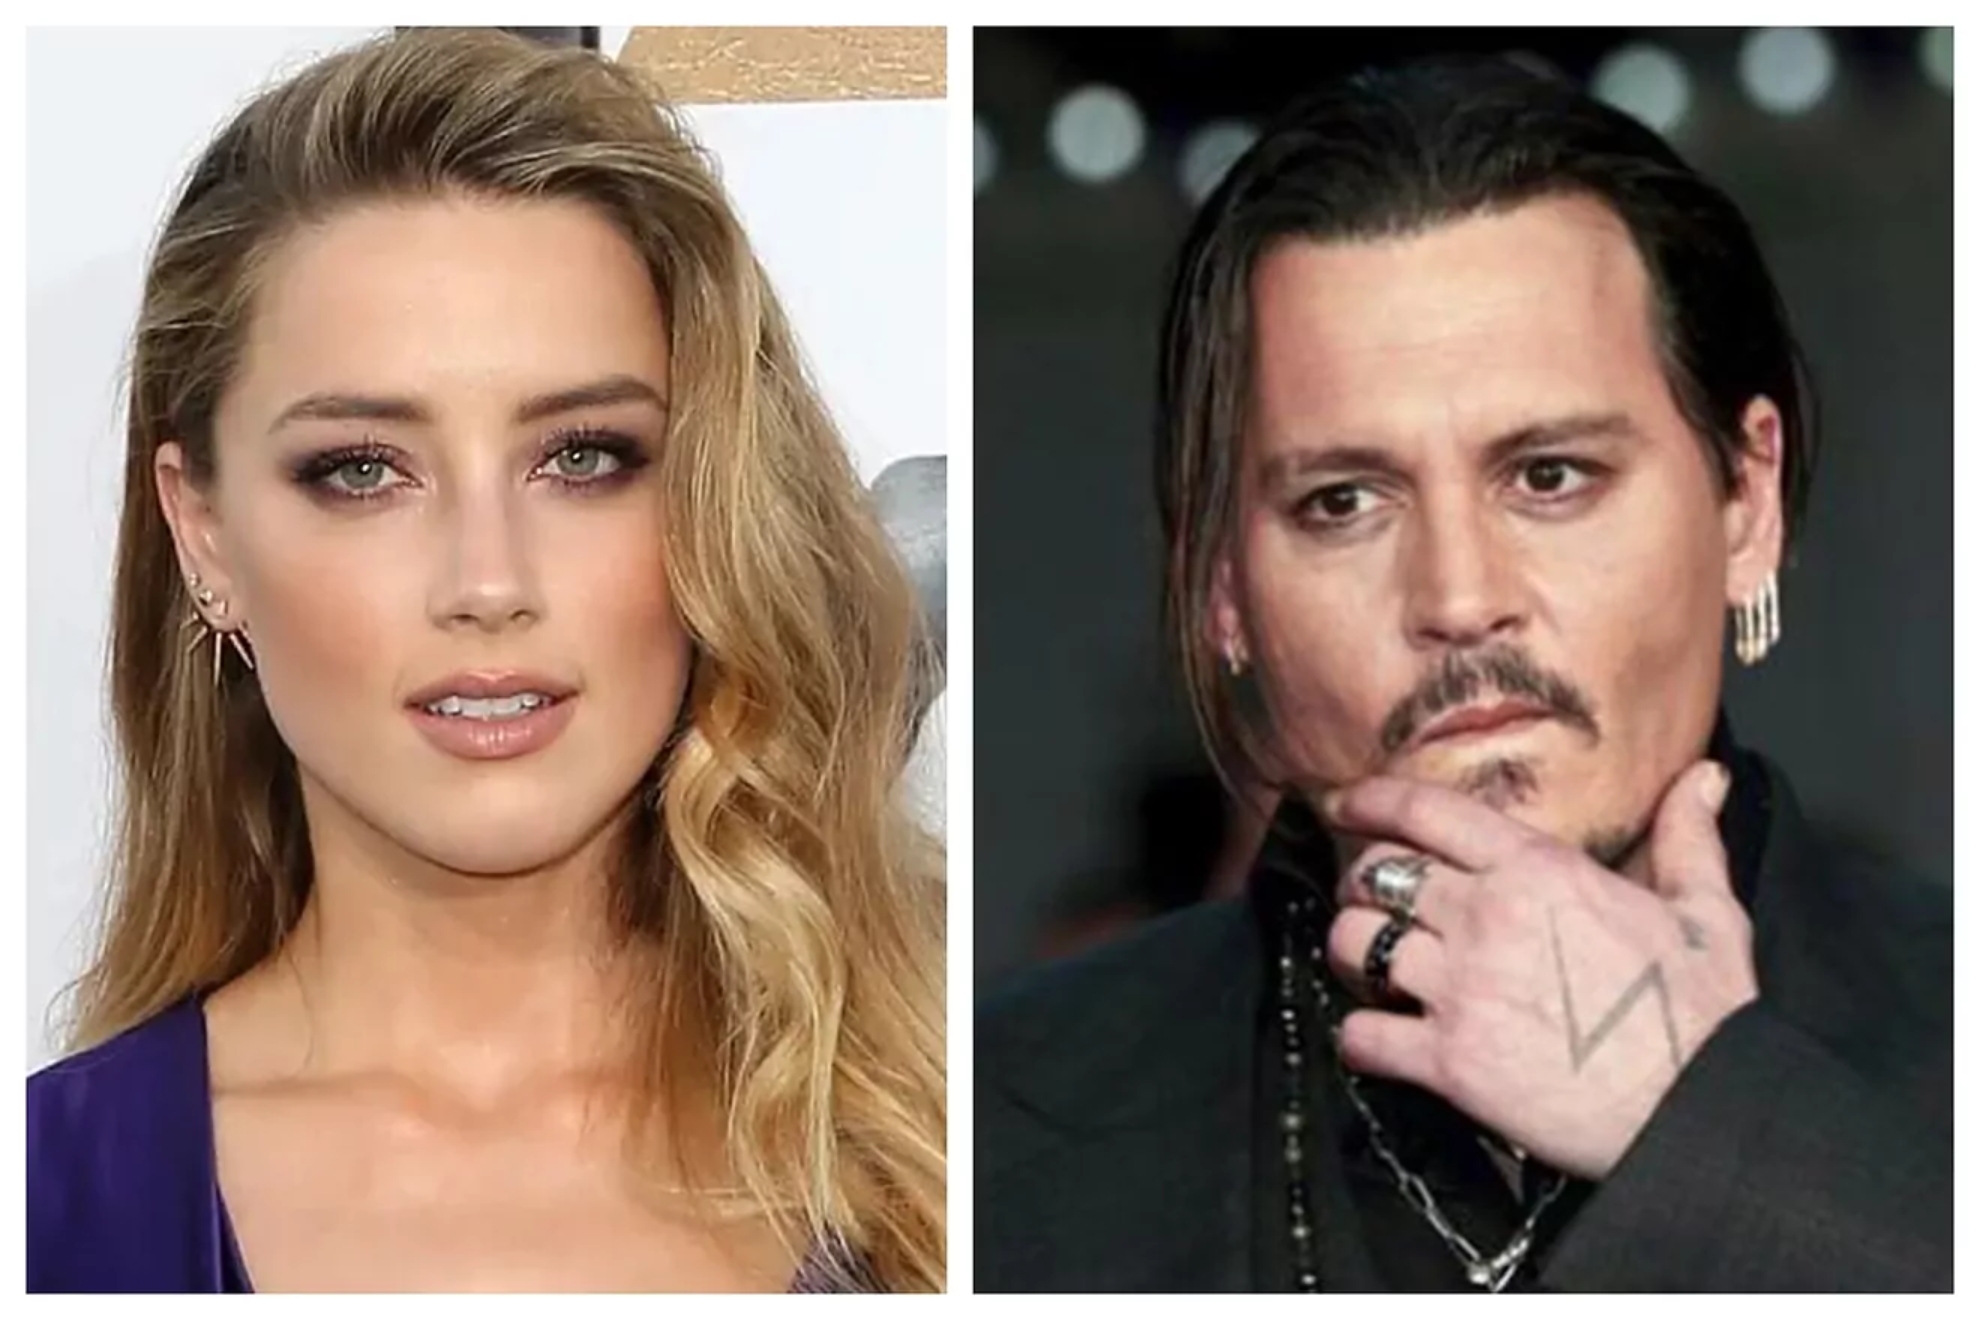 Mashup image of Johnny Depp and Amber Heard